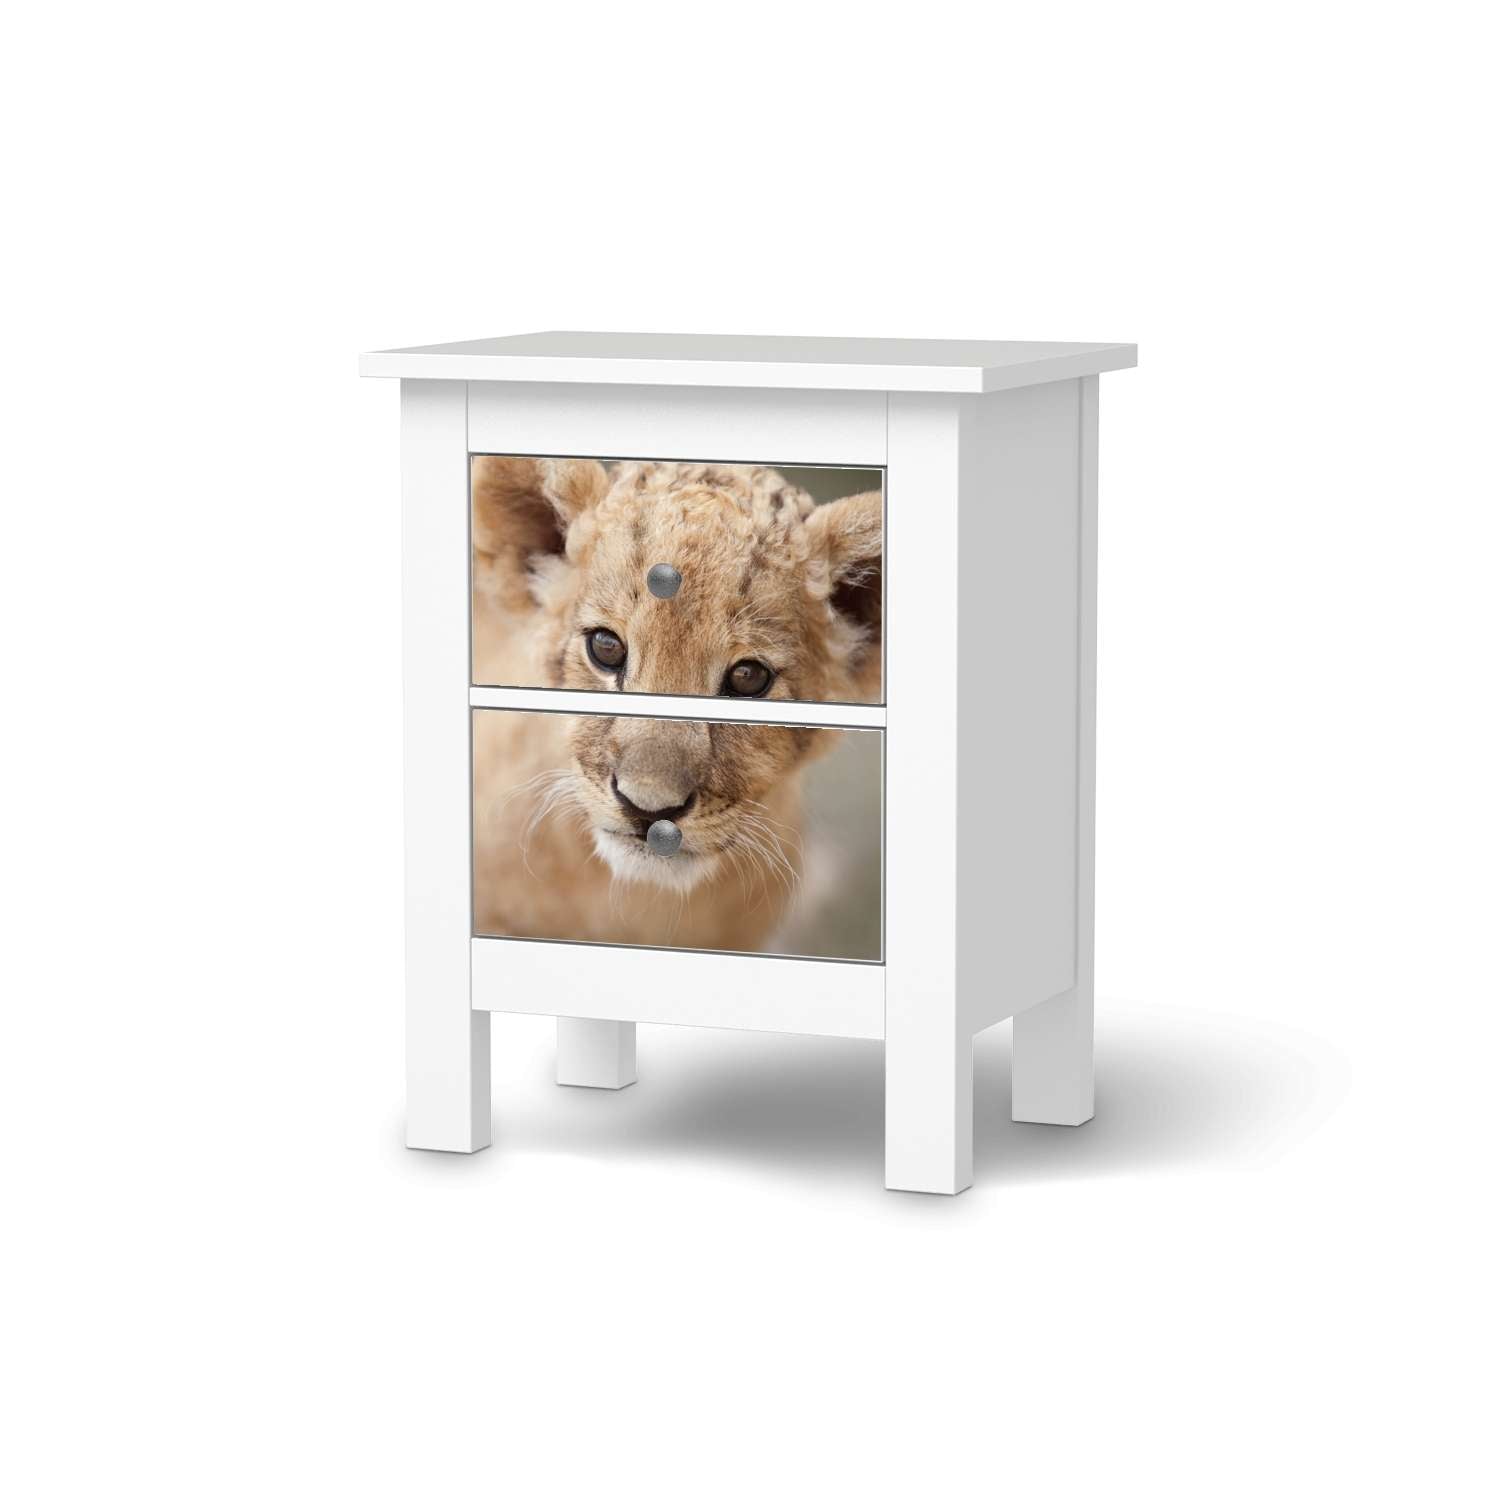 Selbstklebende Folie IKEA Hemnes Kommode 2 Schubladen - Design: Simba von creatisto